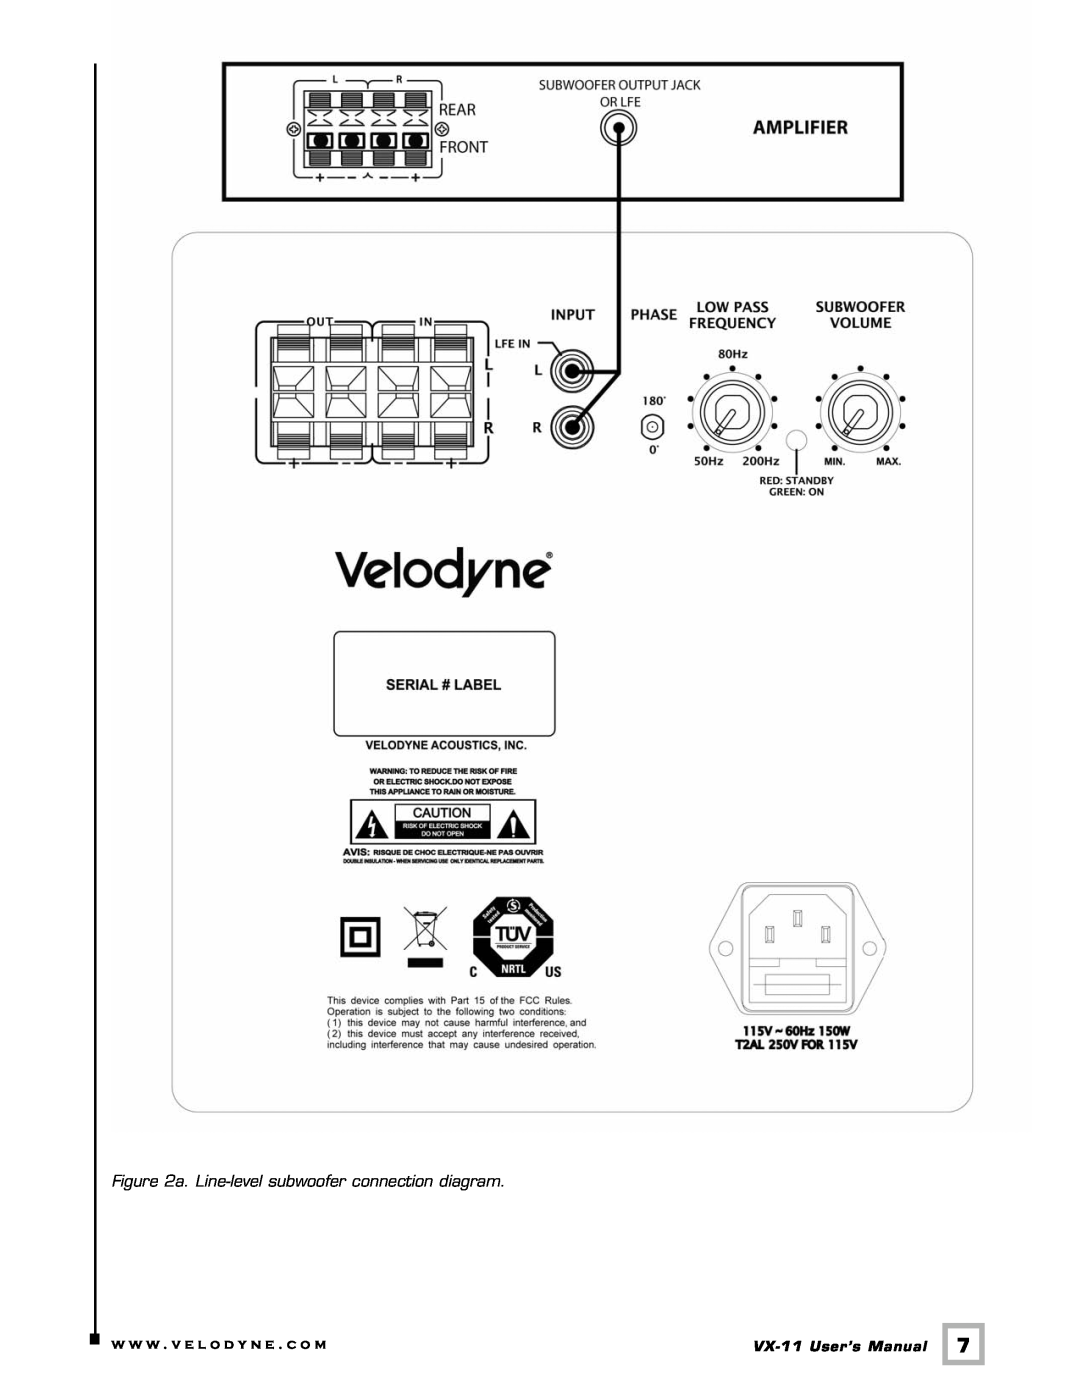 Velodyne Acoustics a. Line-level subwoofer connection diagram, w w w . v e l o d y n e . c o m, VX-11 User’s Manual 